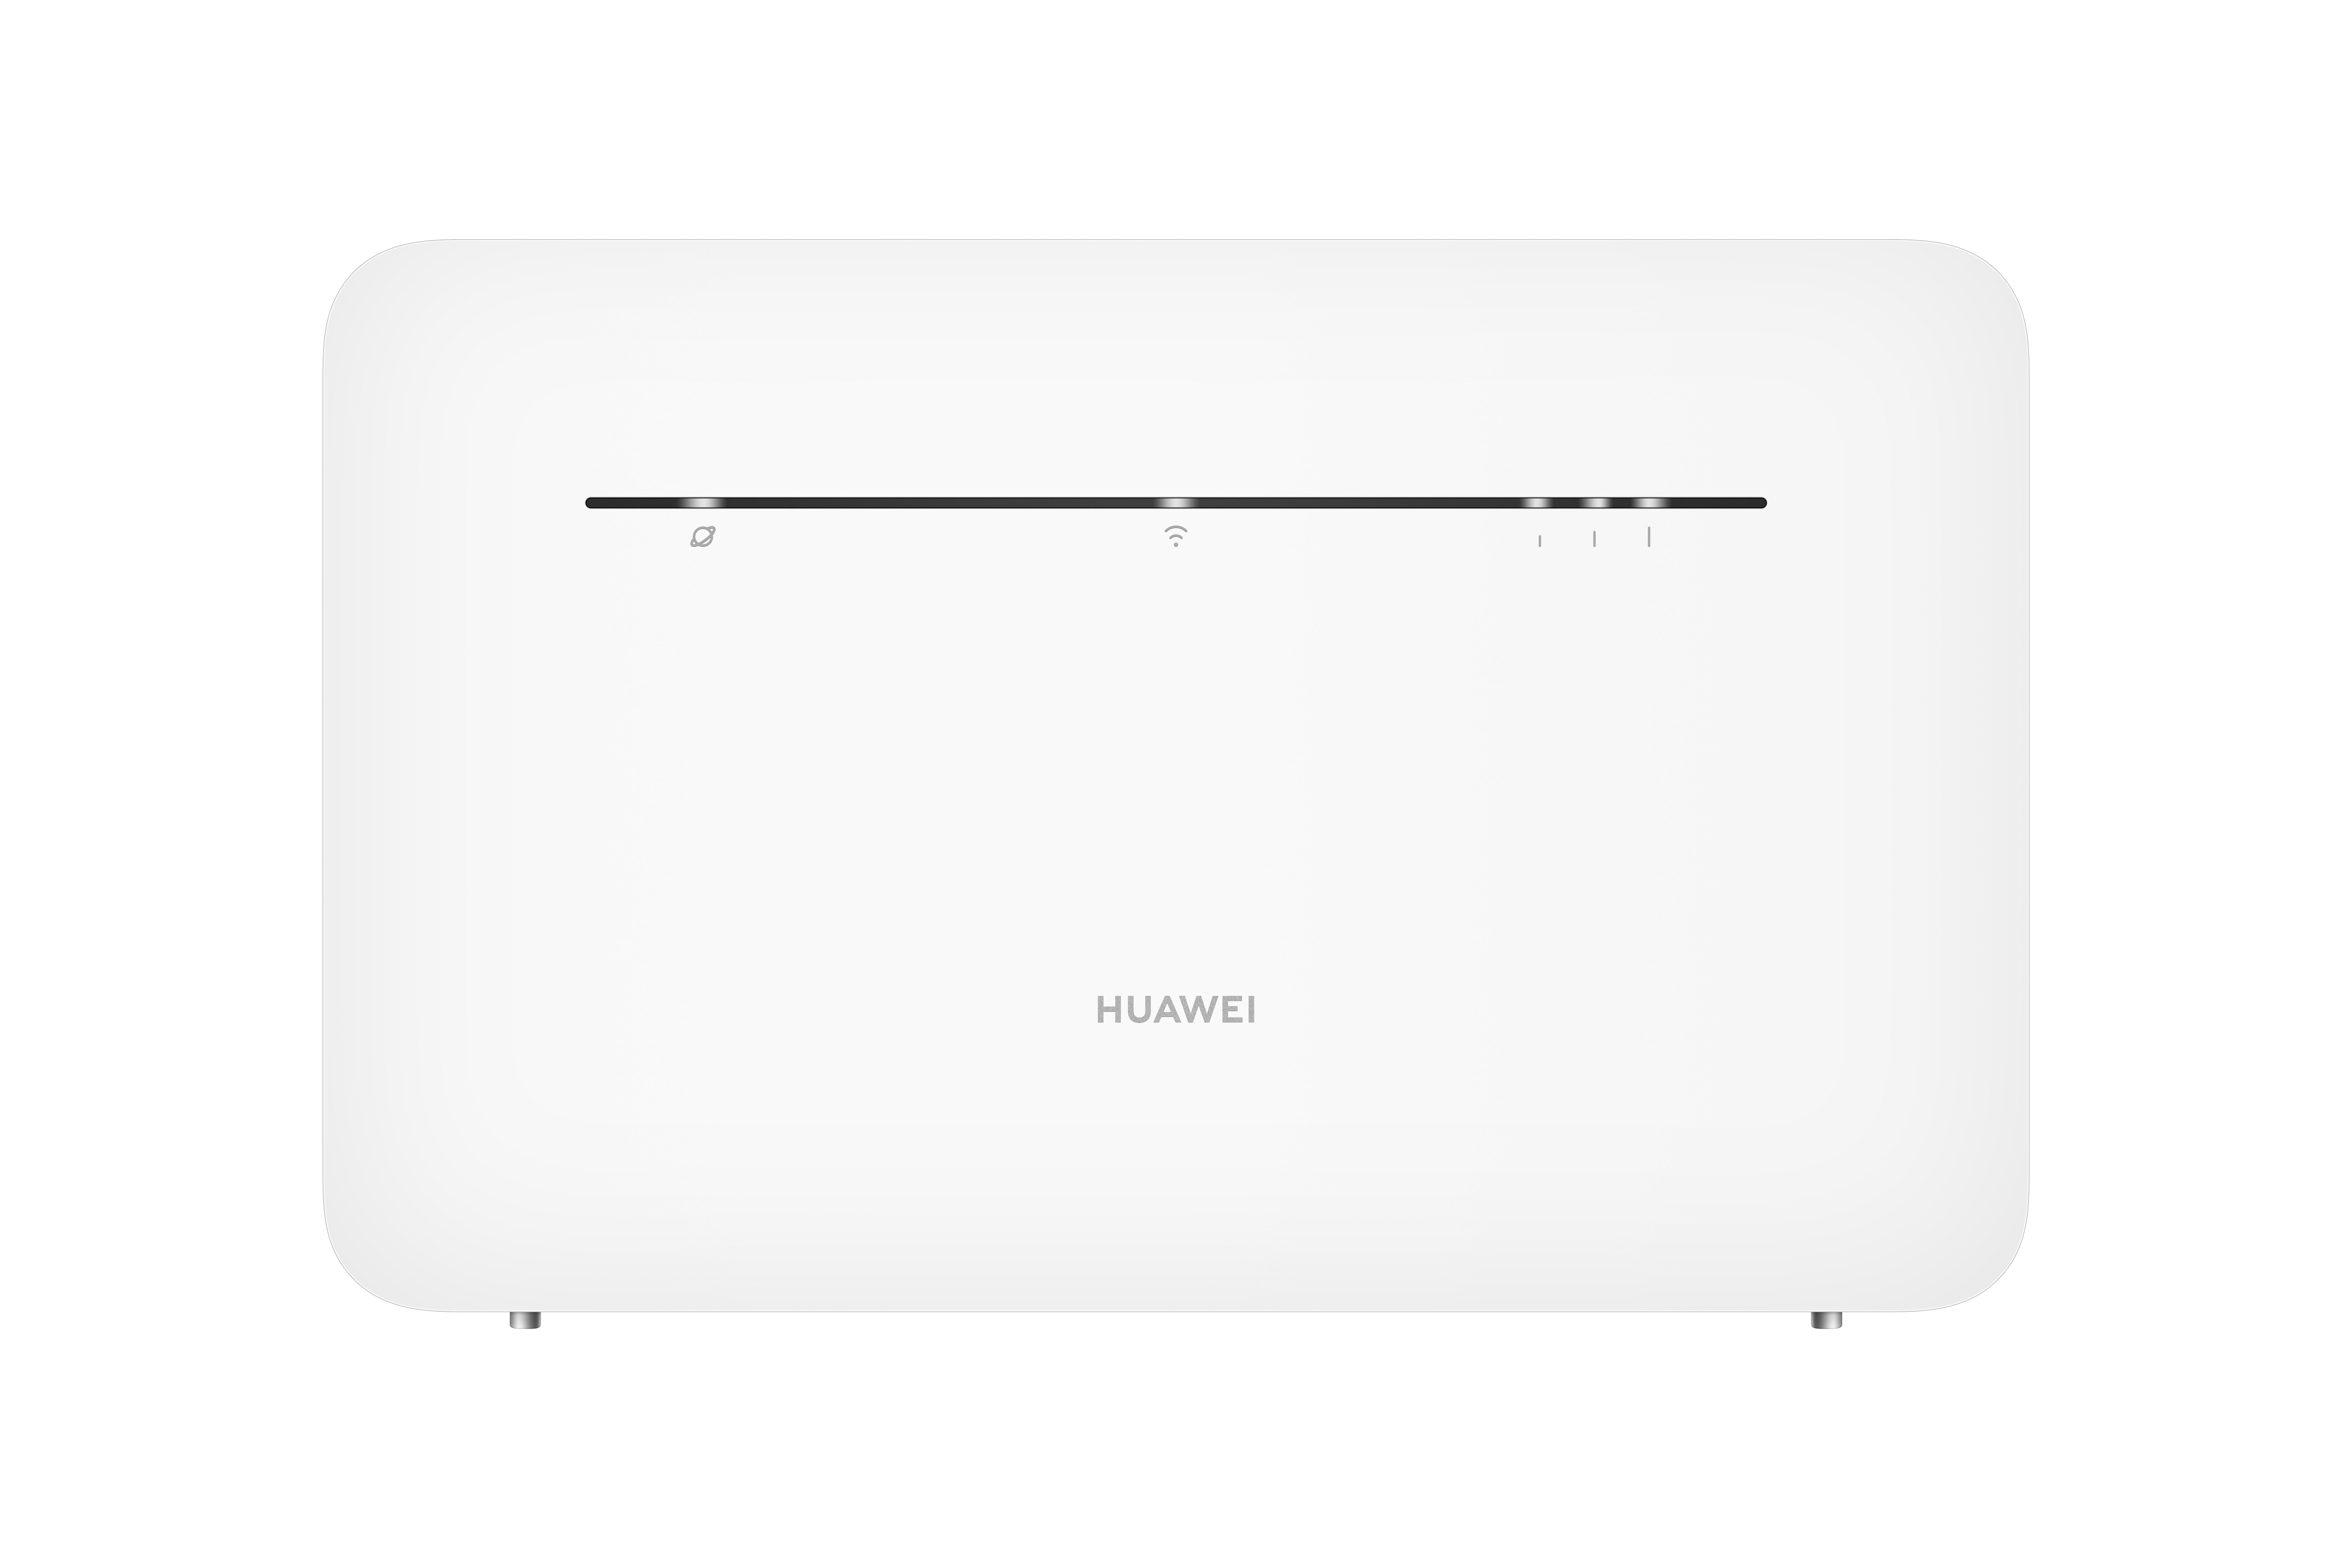 HUAWEI 4G (B535-232a) Router